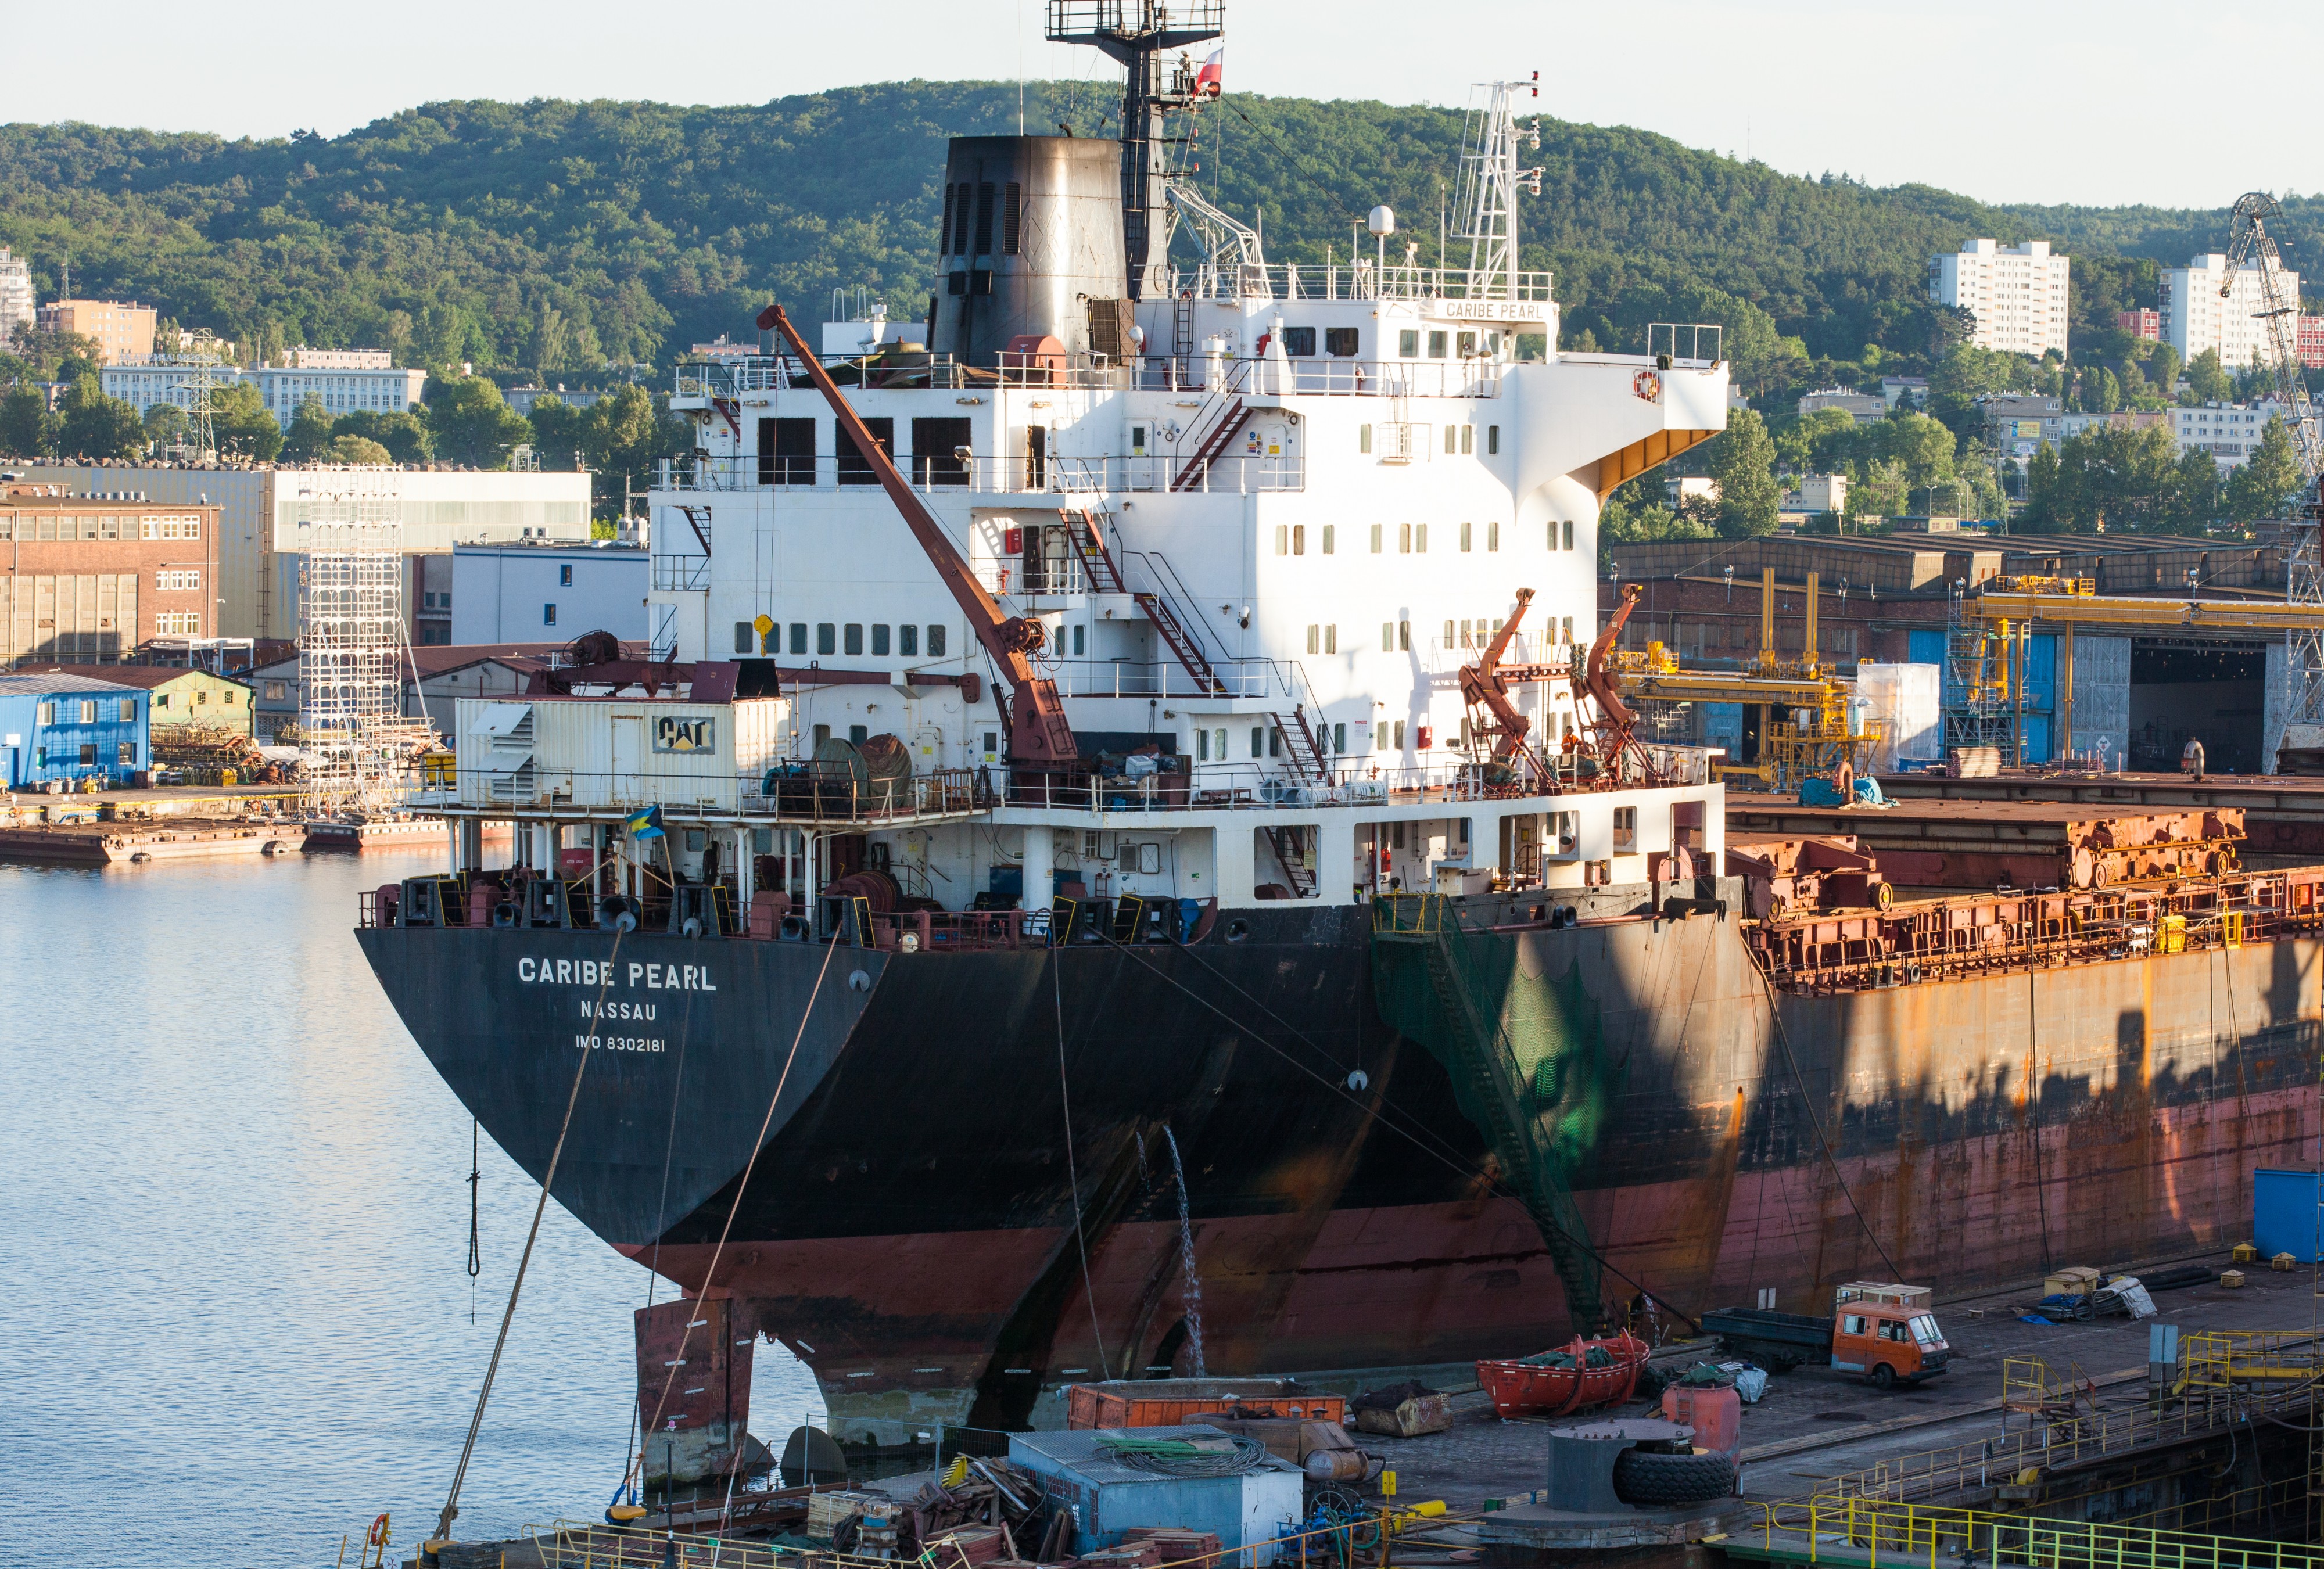 Caribe Pearl ship, Gdynia, June 2014